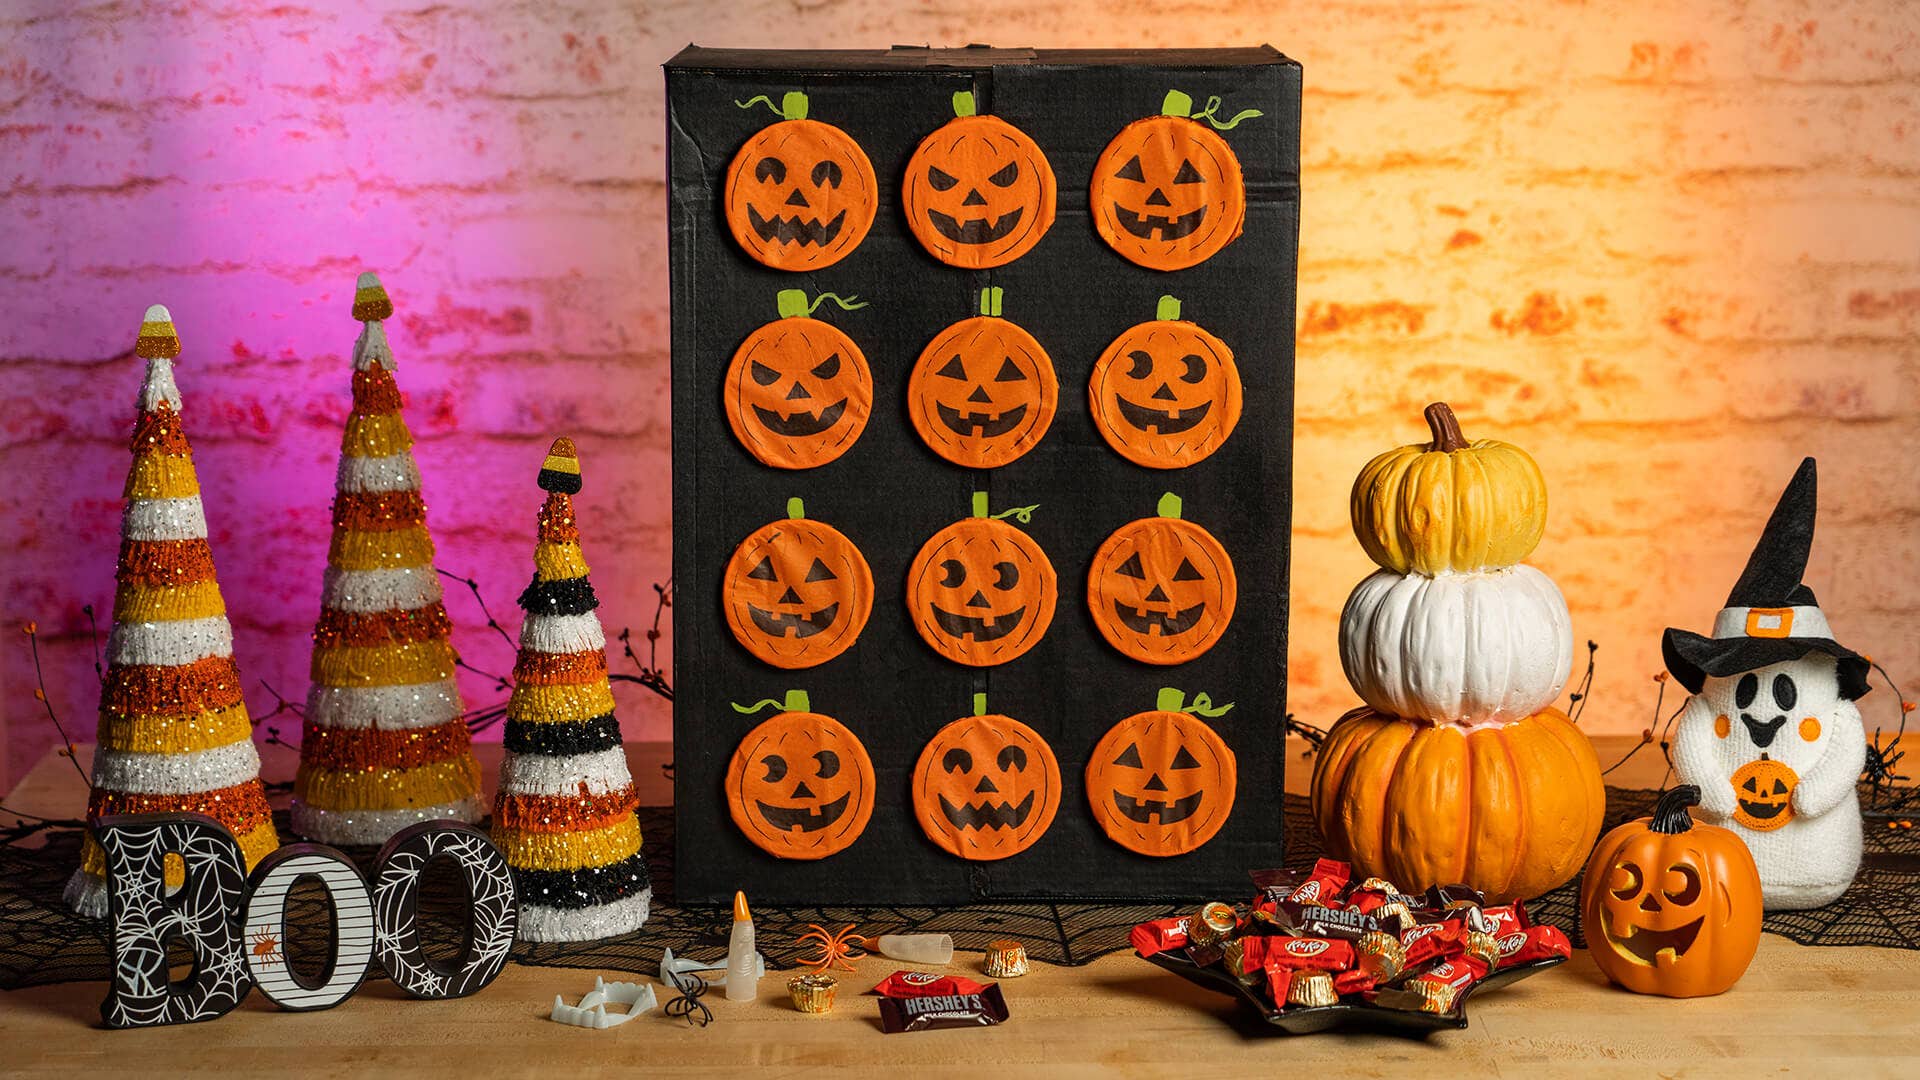 poke a pumpkin game on halloween themed table